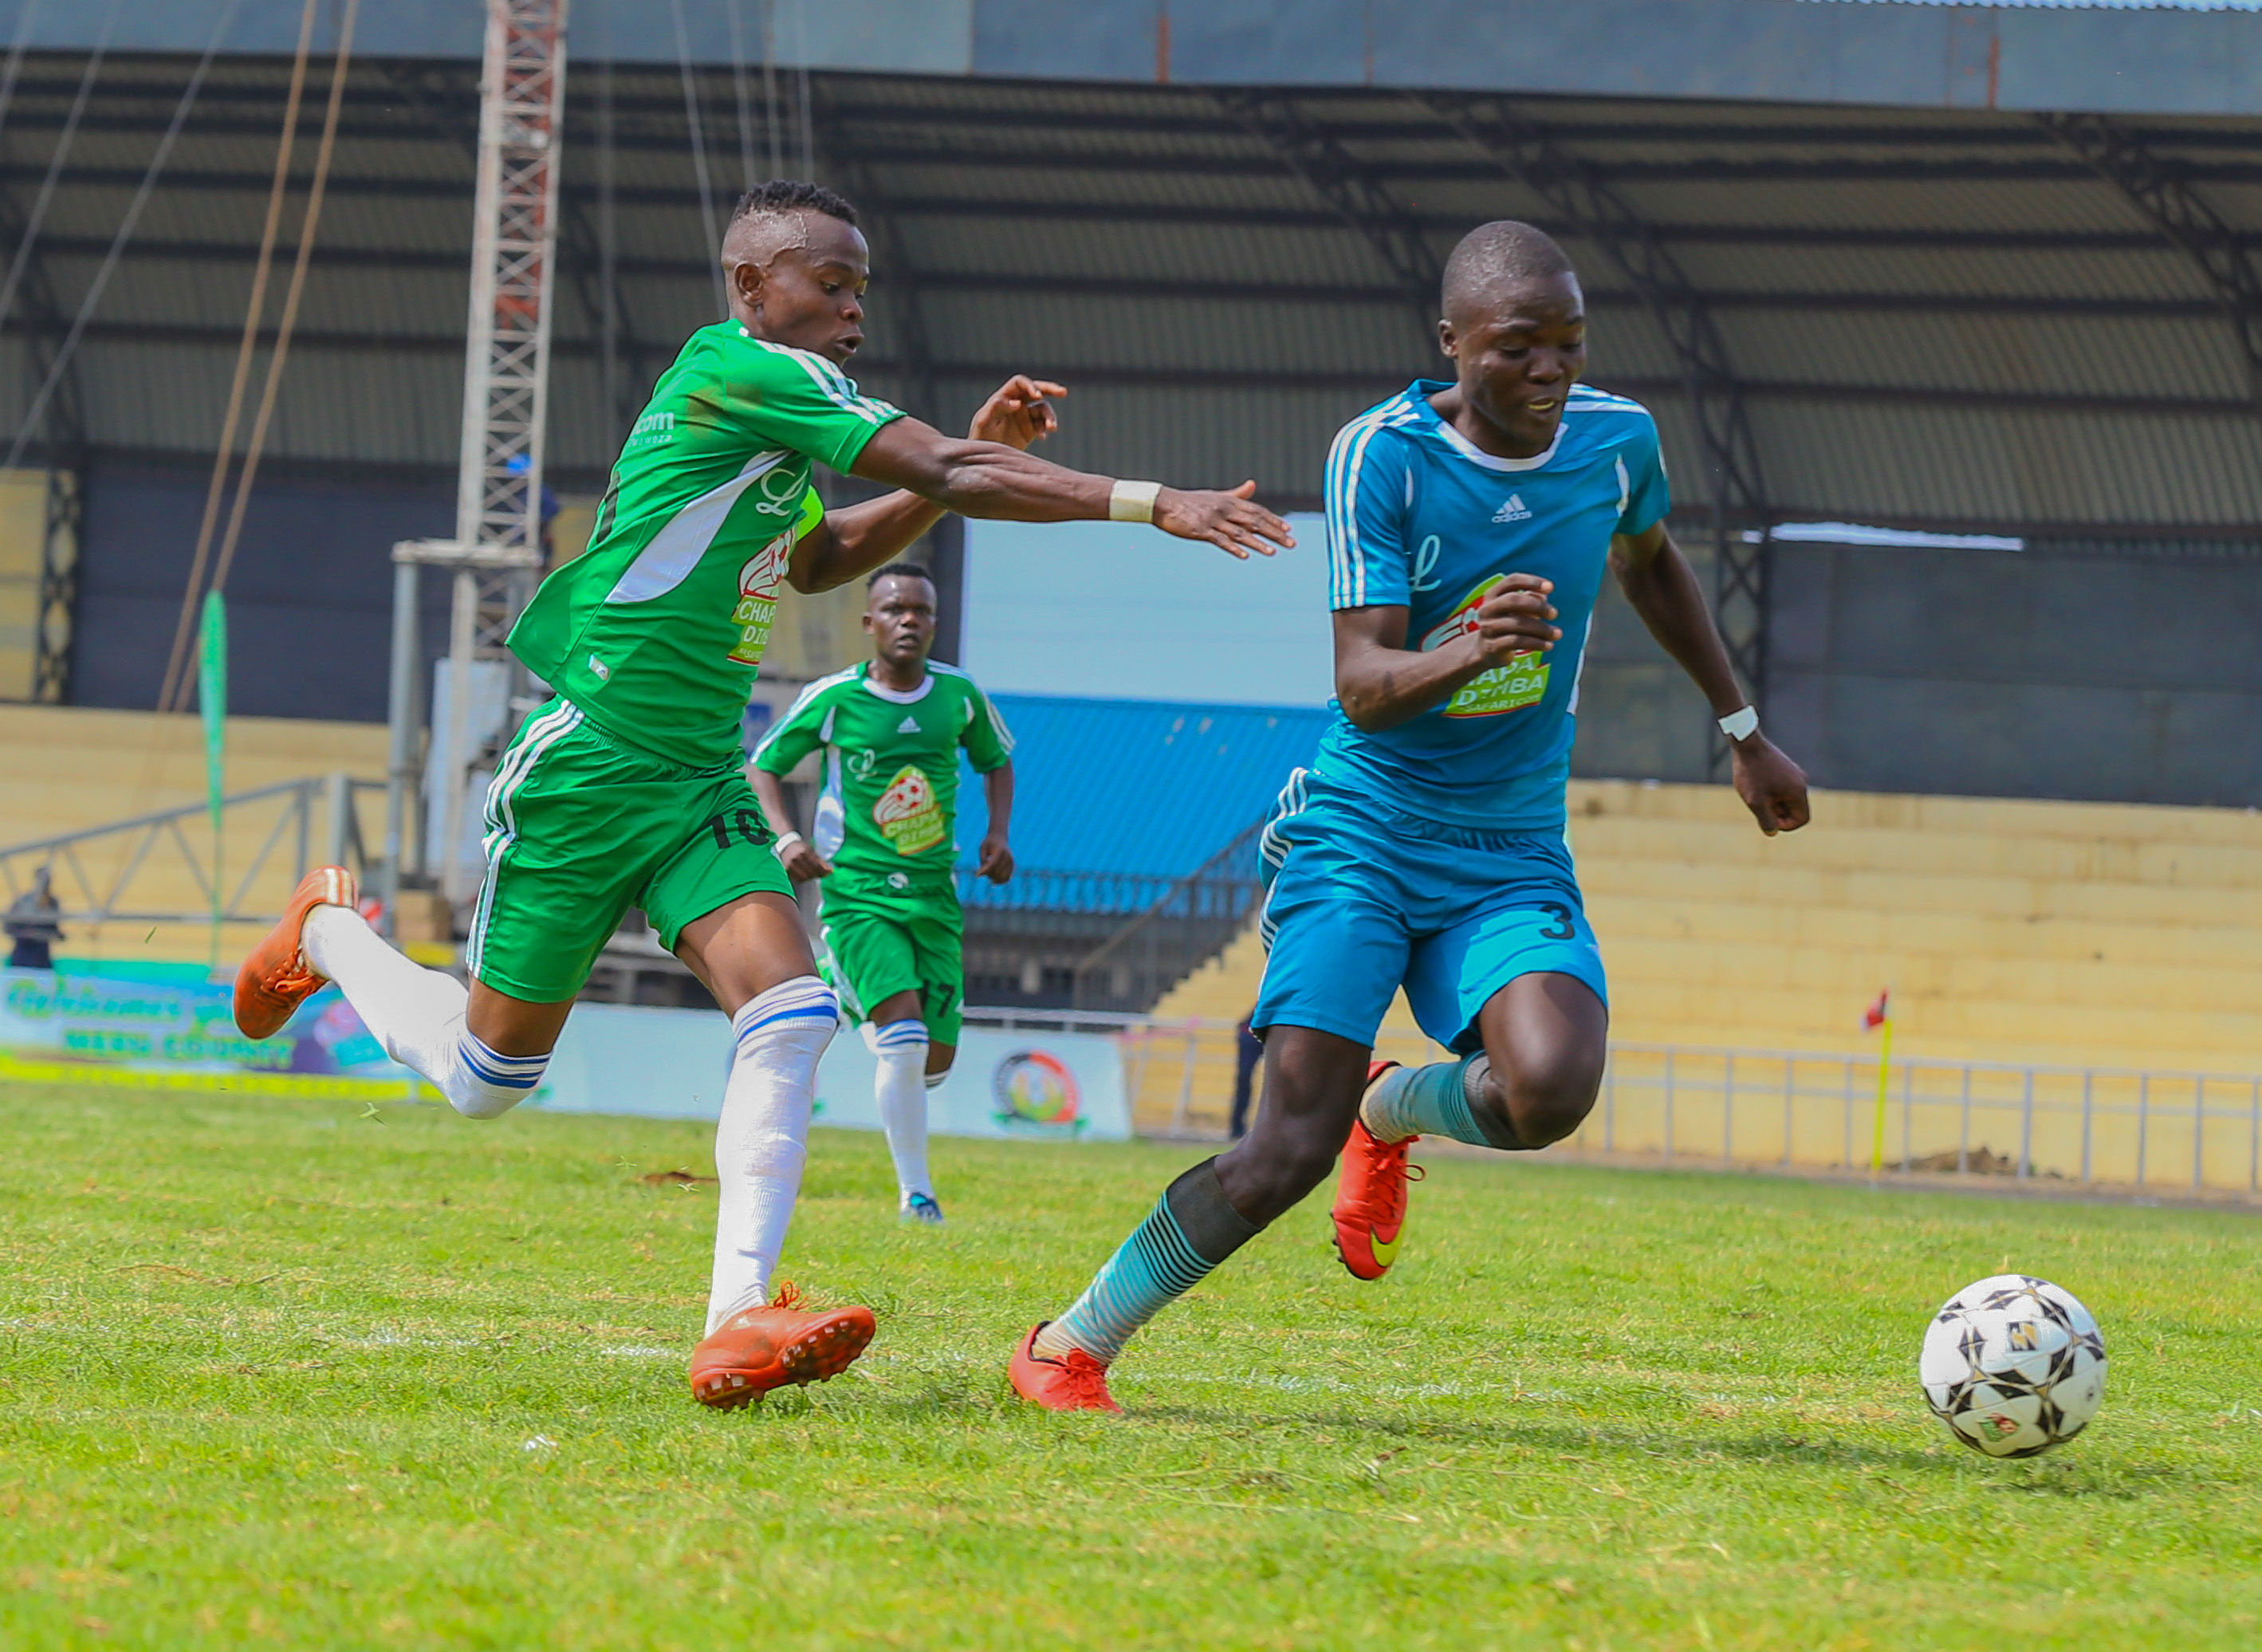 Chapa Dimba Na Safaricom National Finals Underway in Meru